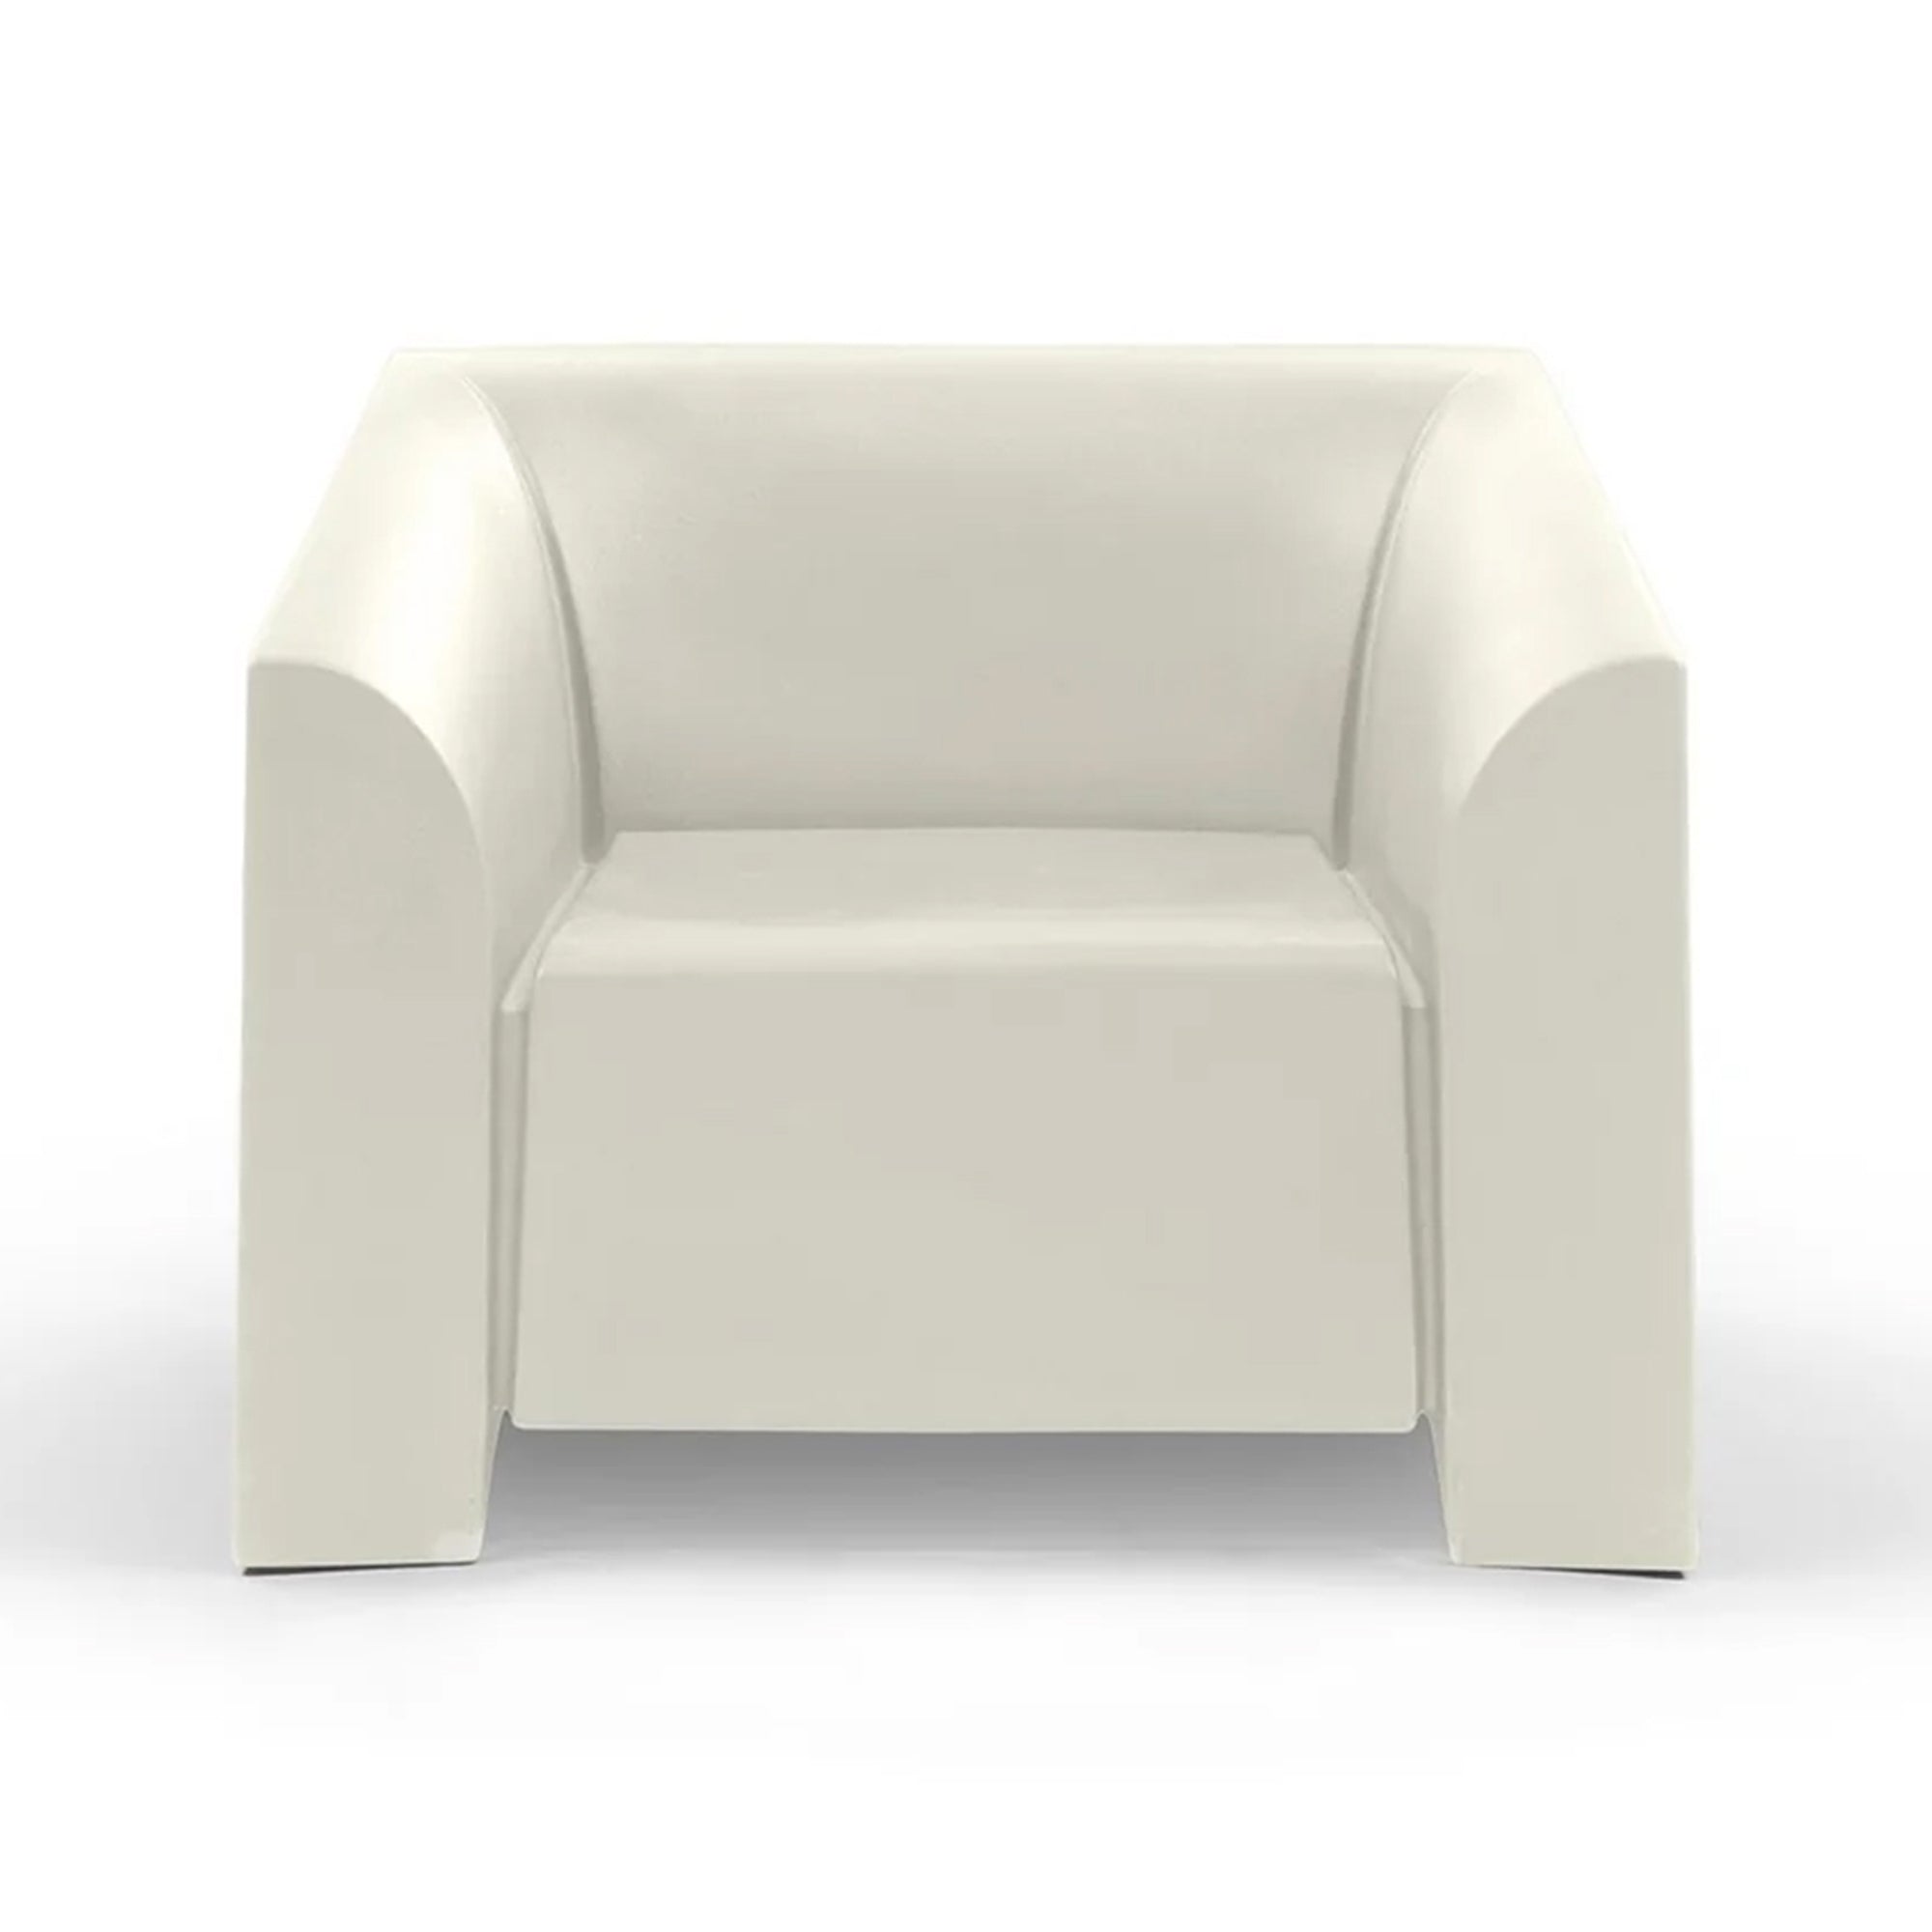 MB1 Lounge Chair